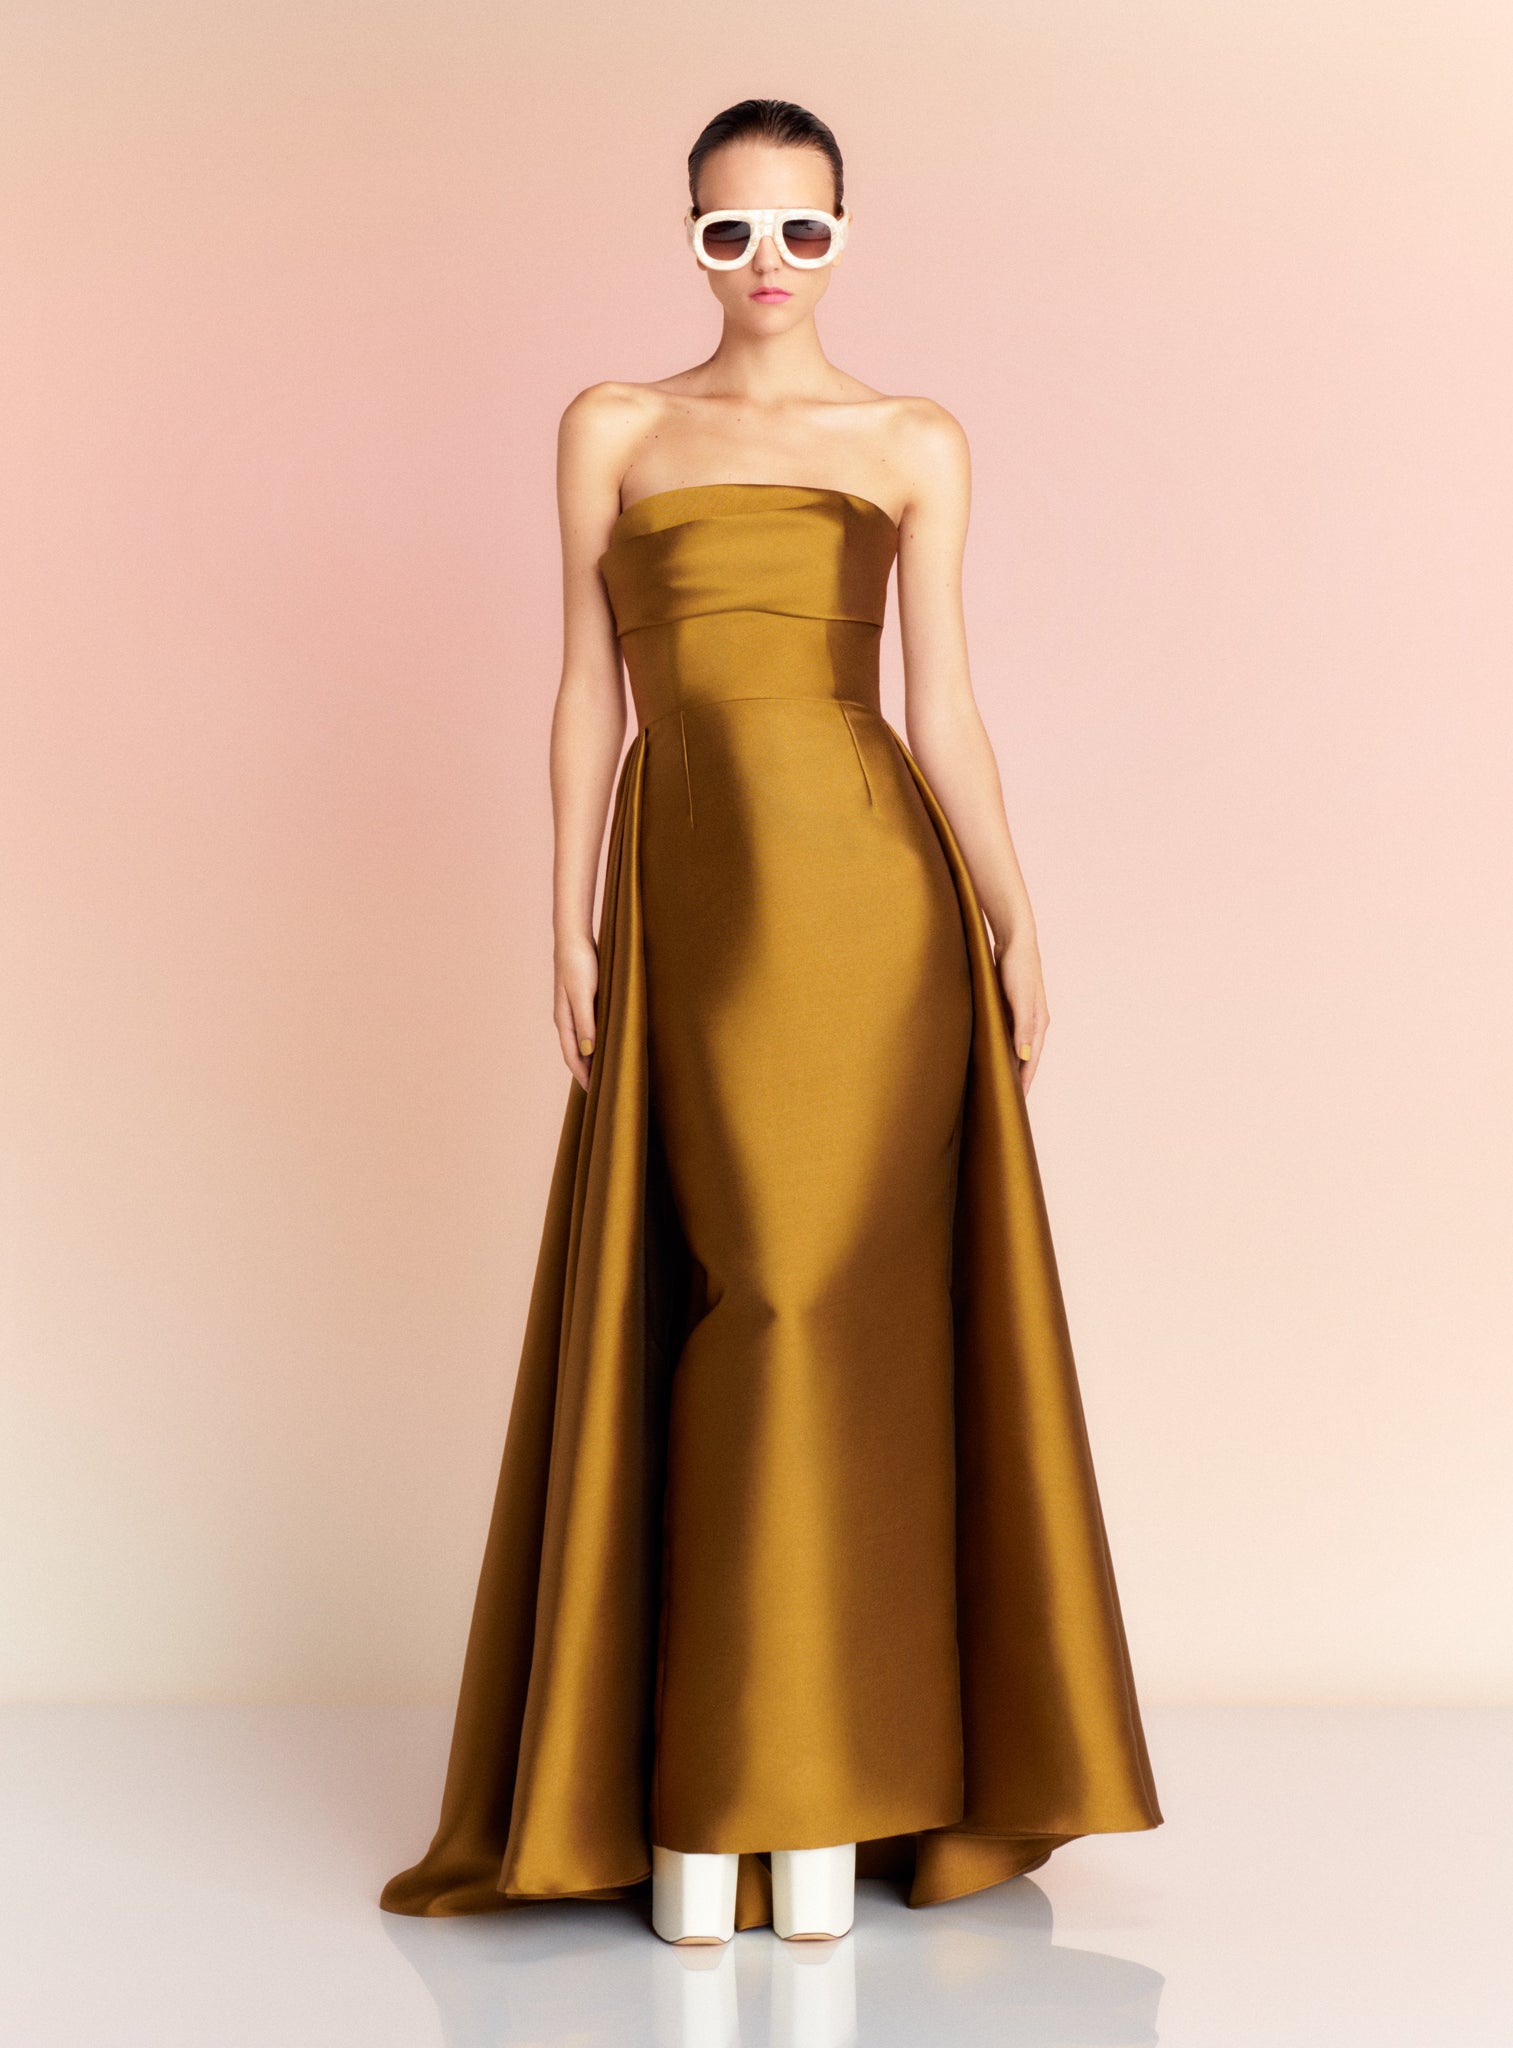 The Tiffany Maxi Dress in Gold